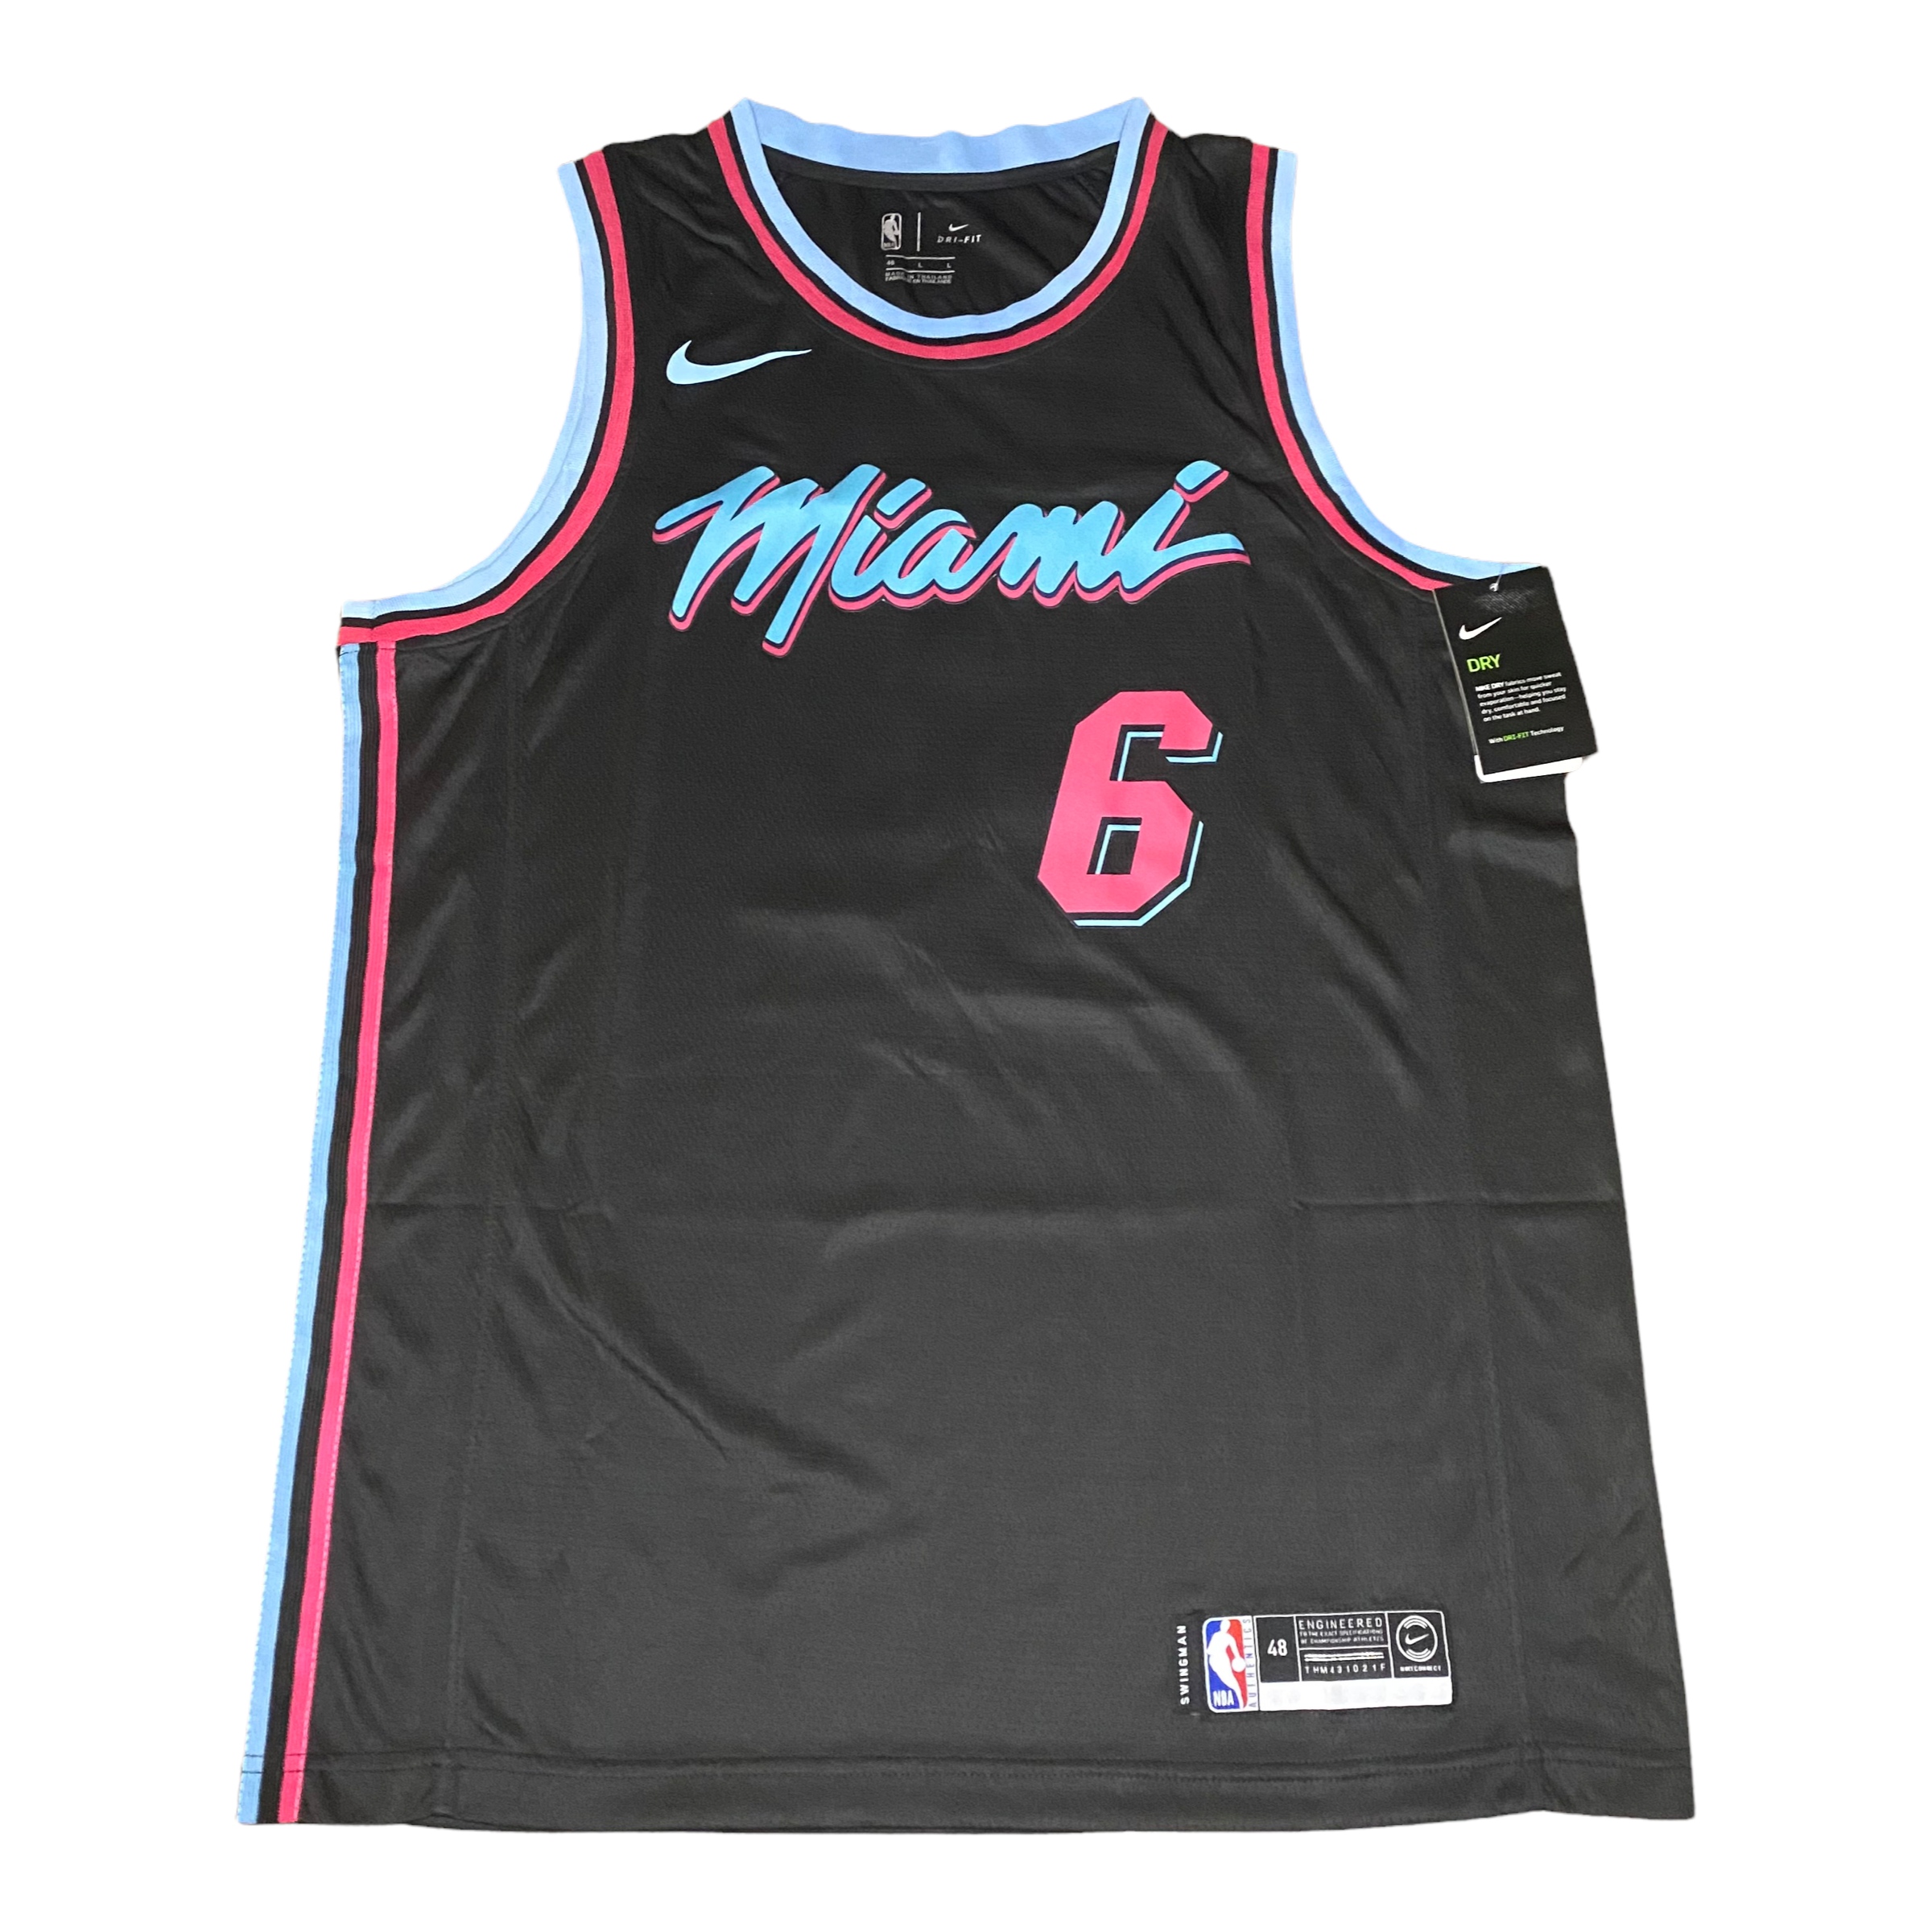 The Heat's 'Miami Vice' City Edition Jersey